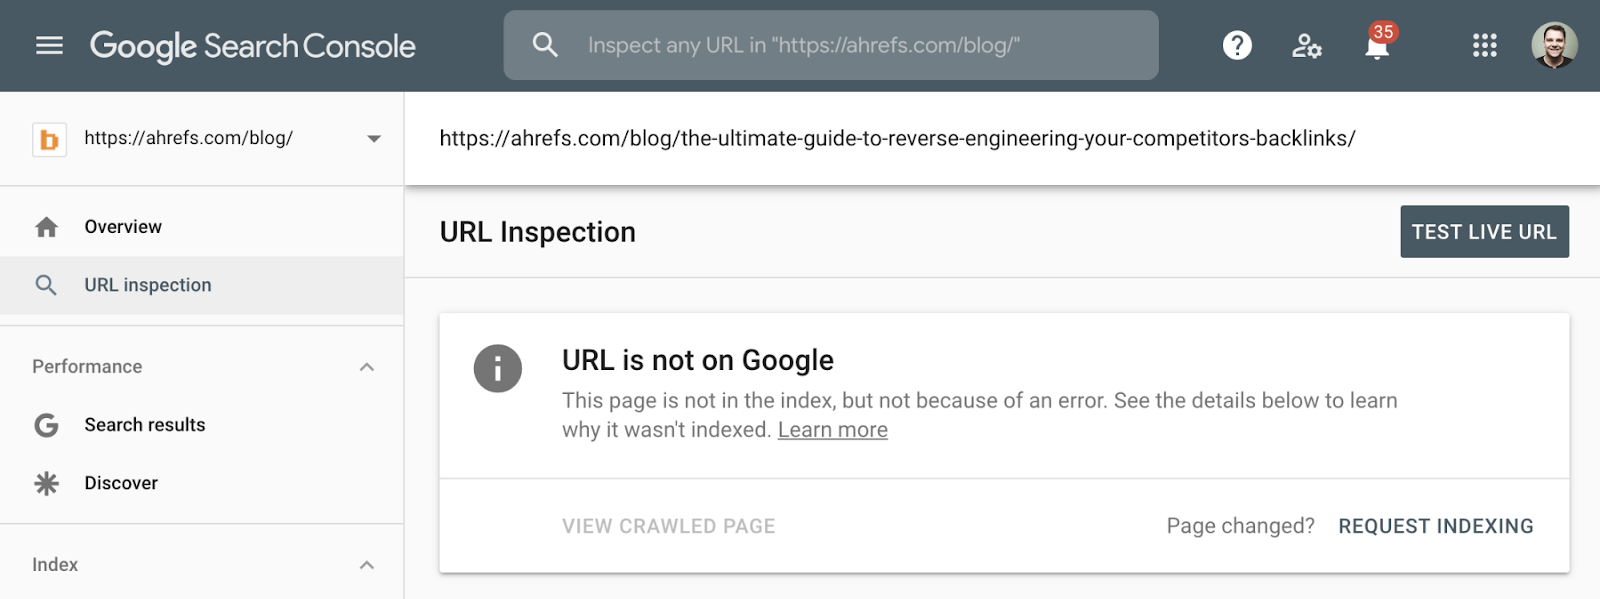 6 url is not on google